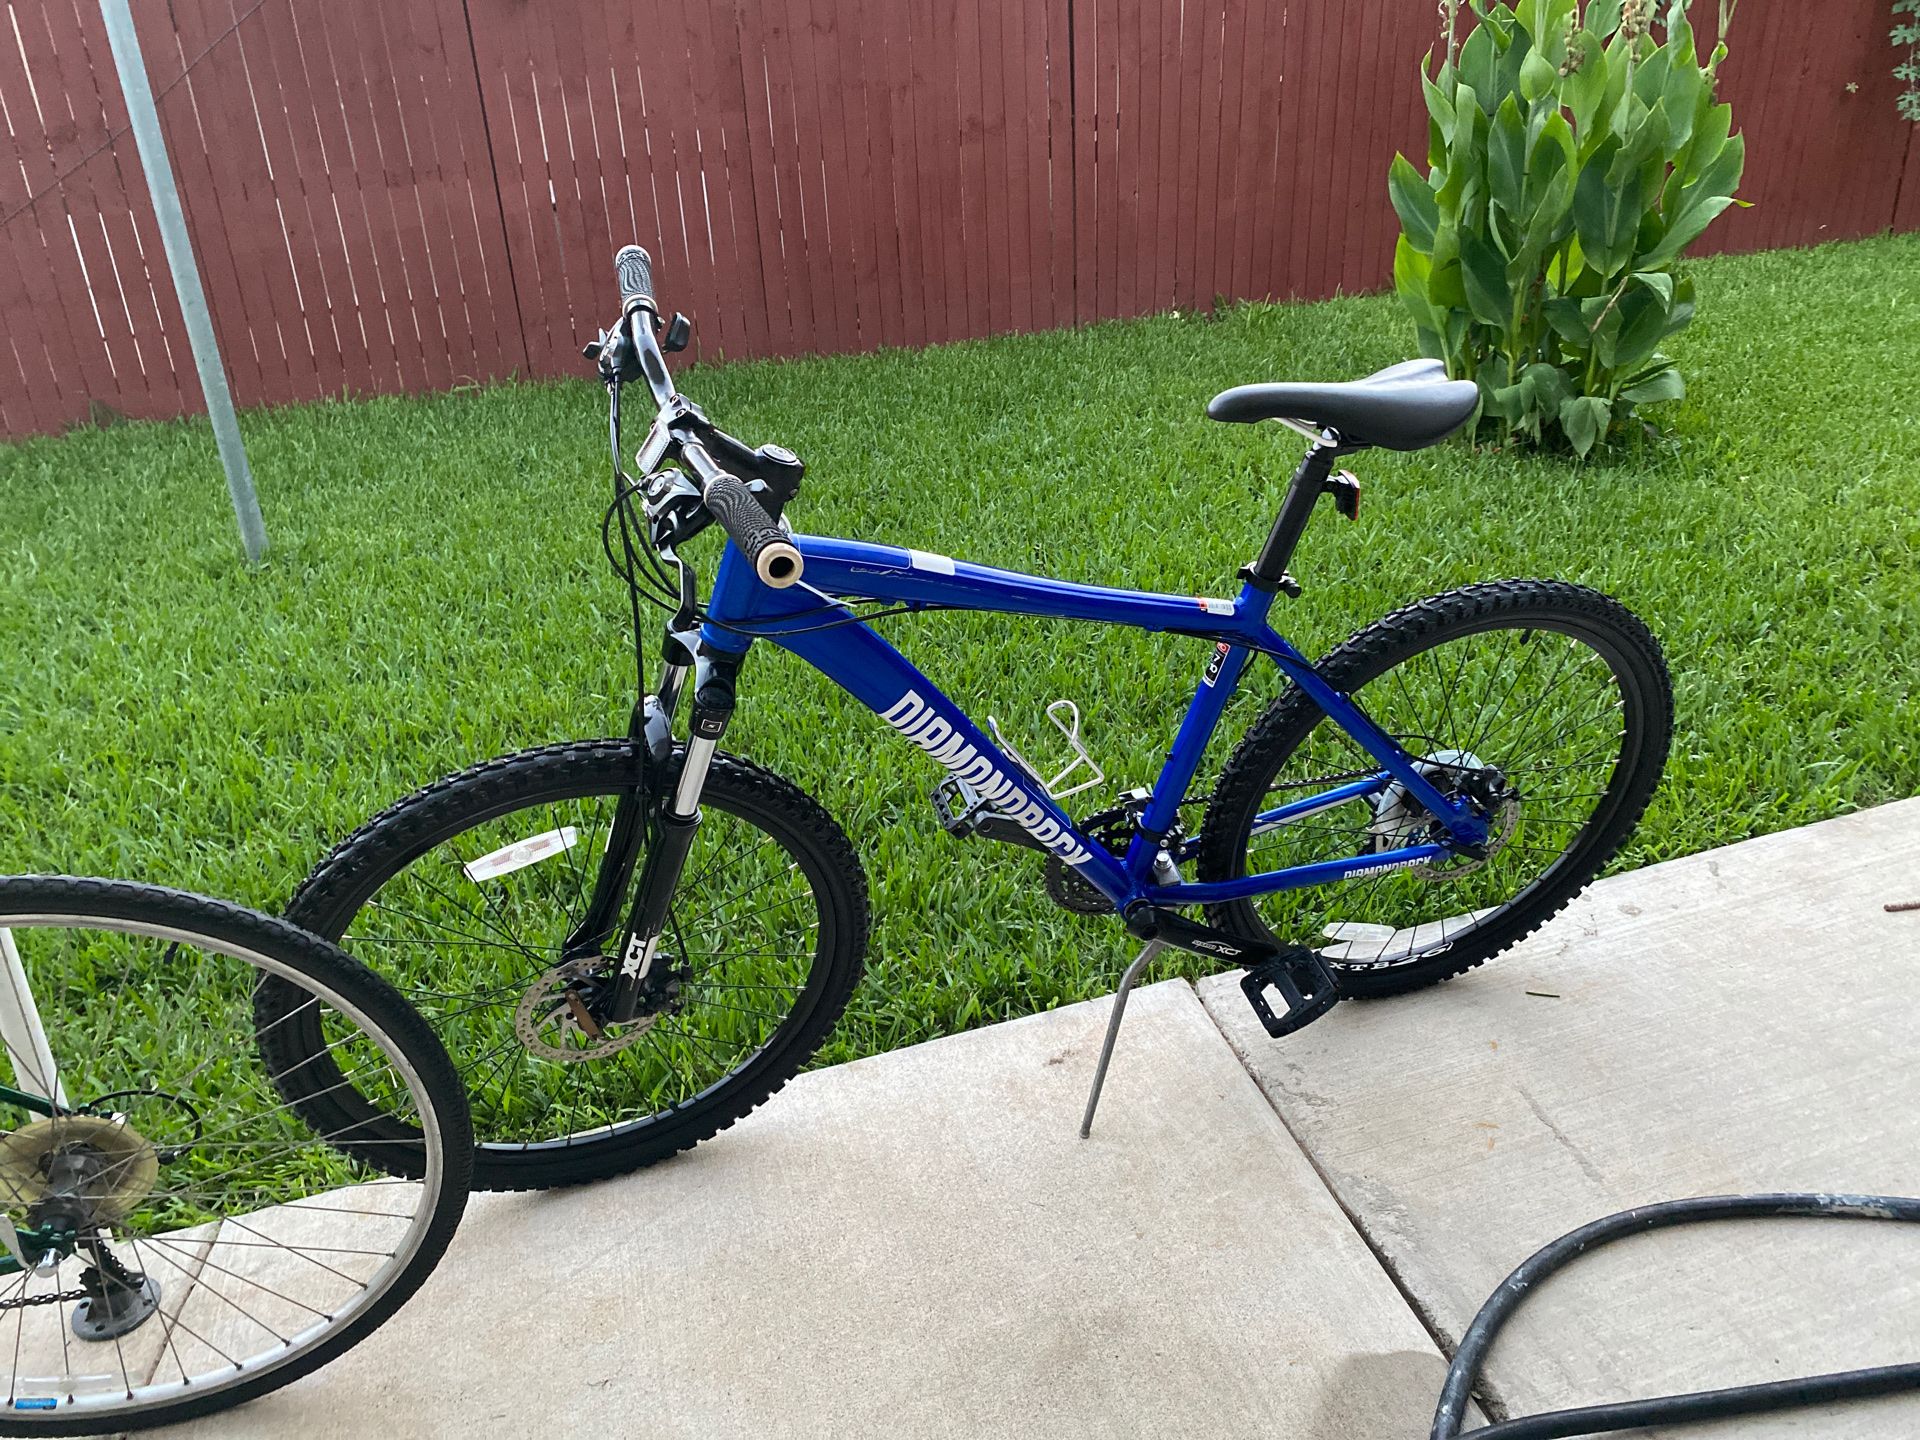 19” Green Trek bike & blue Diamondback $450 for both